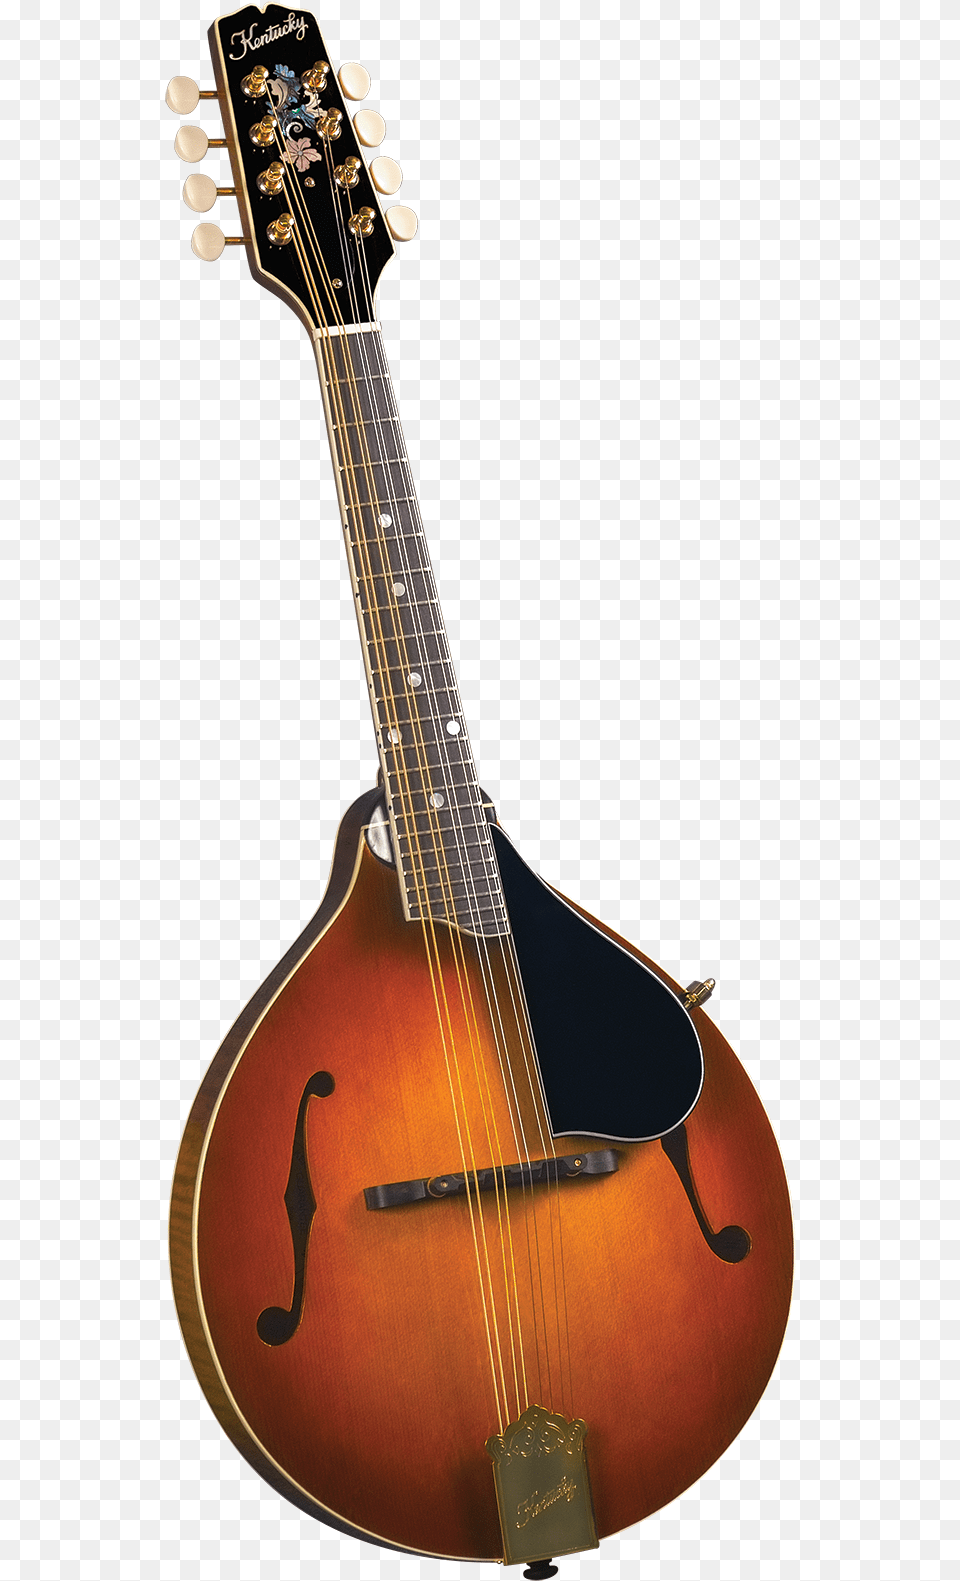 Kentucky Km 505 Mandolin Kentucky Km 505 Artist A Model Mandolin Amberburst, Musical Instrument, Guitar, Lute Free Transparent Png